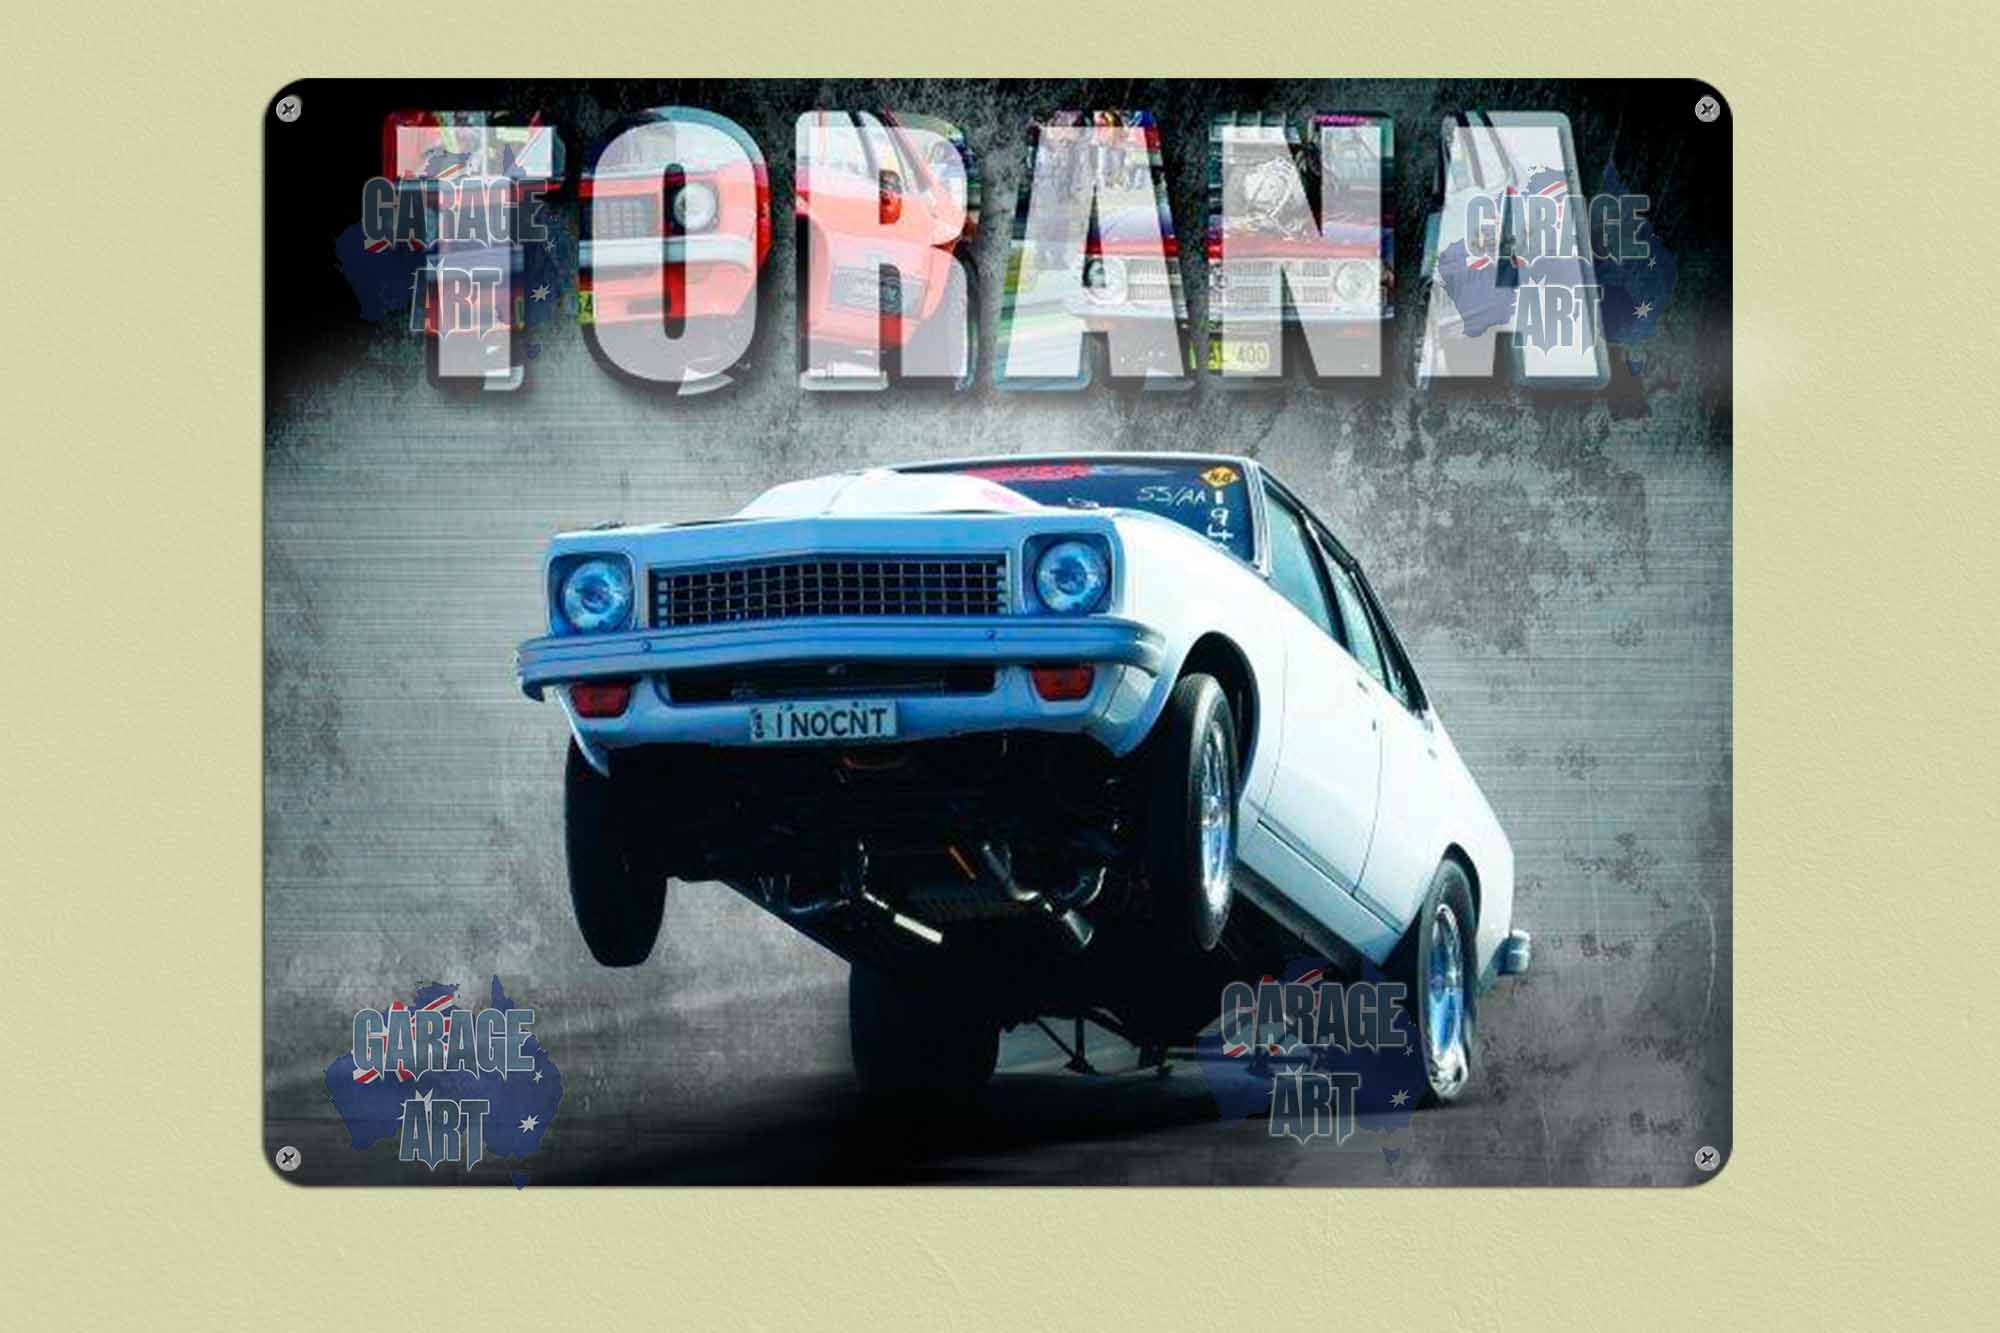 Torana Mono Tin Sign freeshipping - garageartaustralia